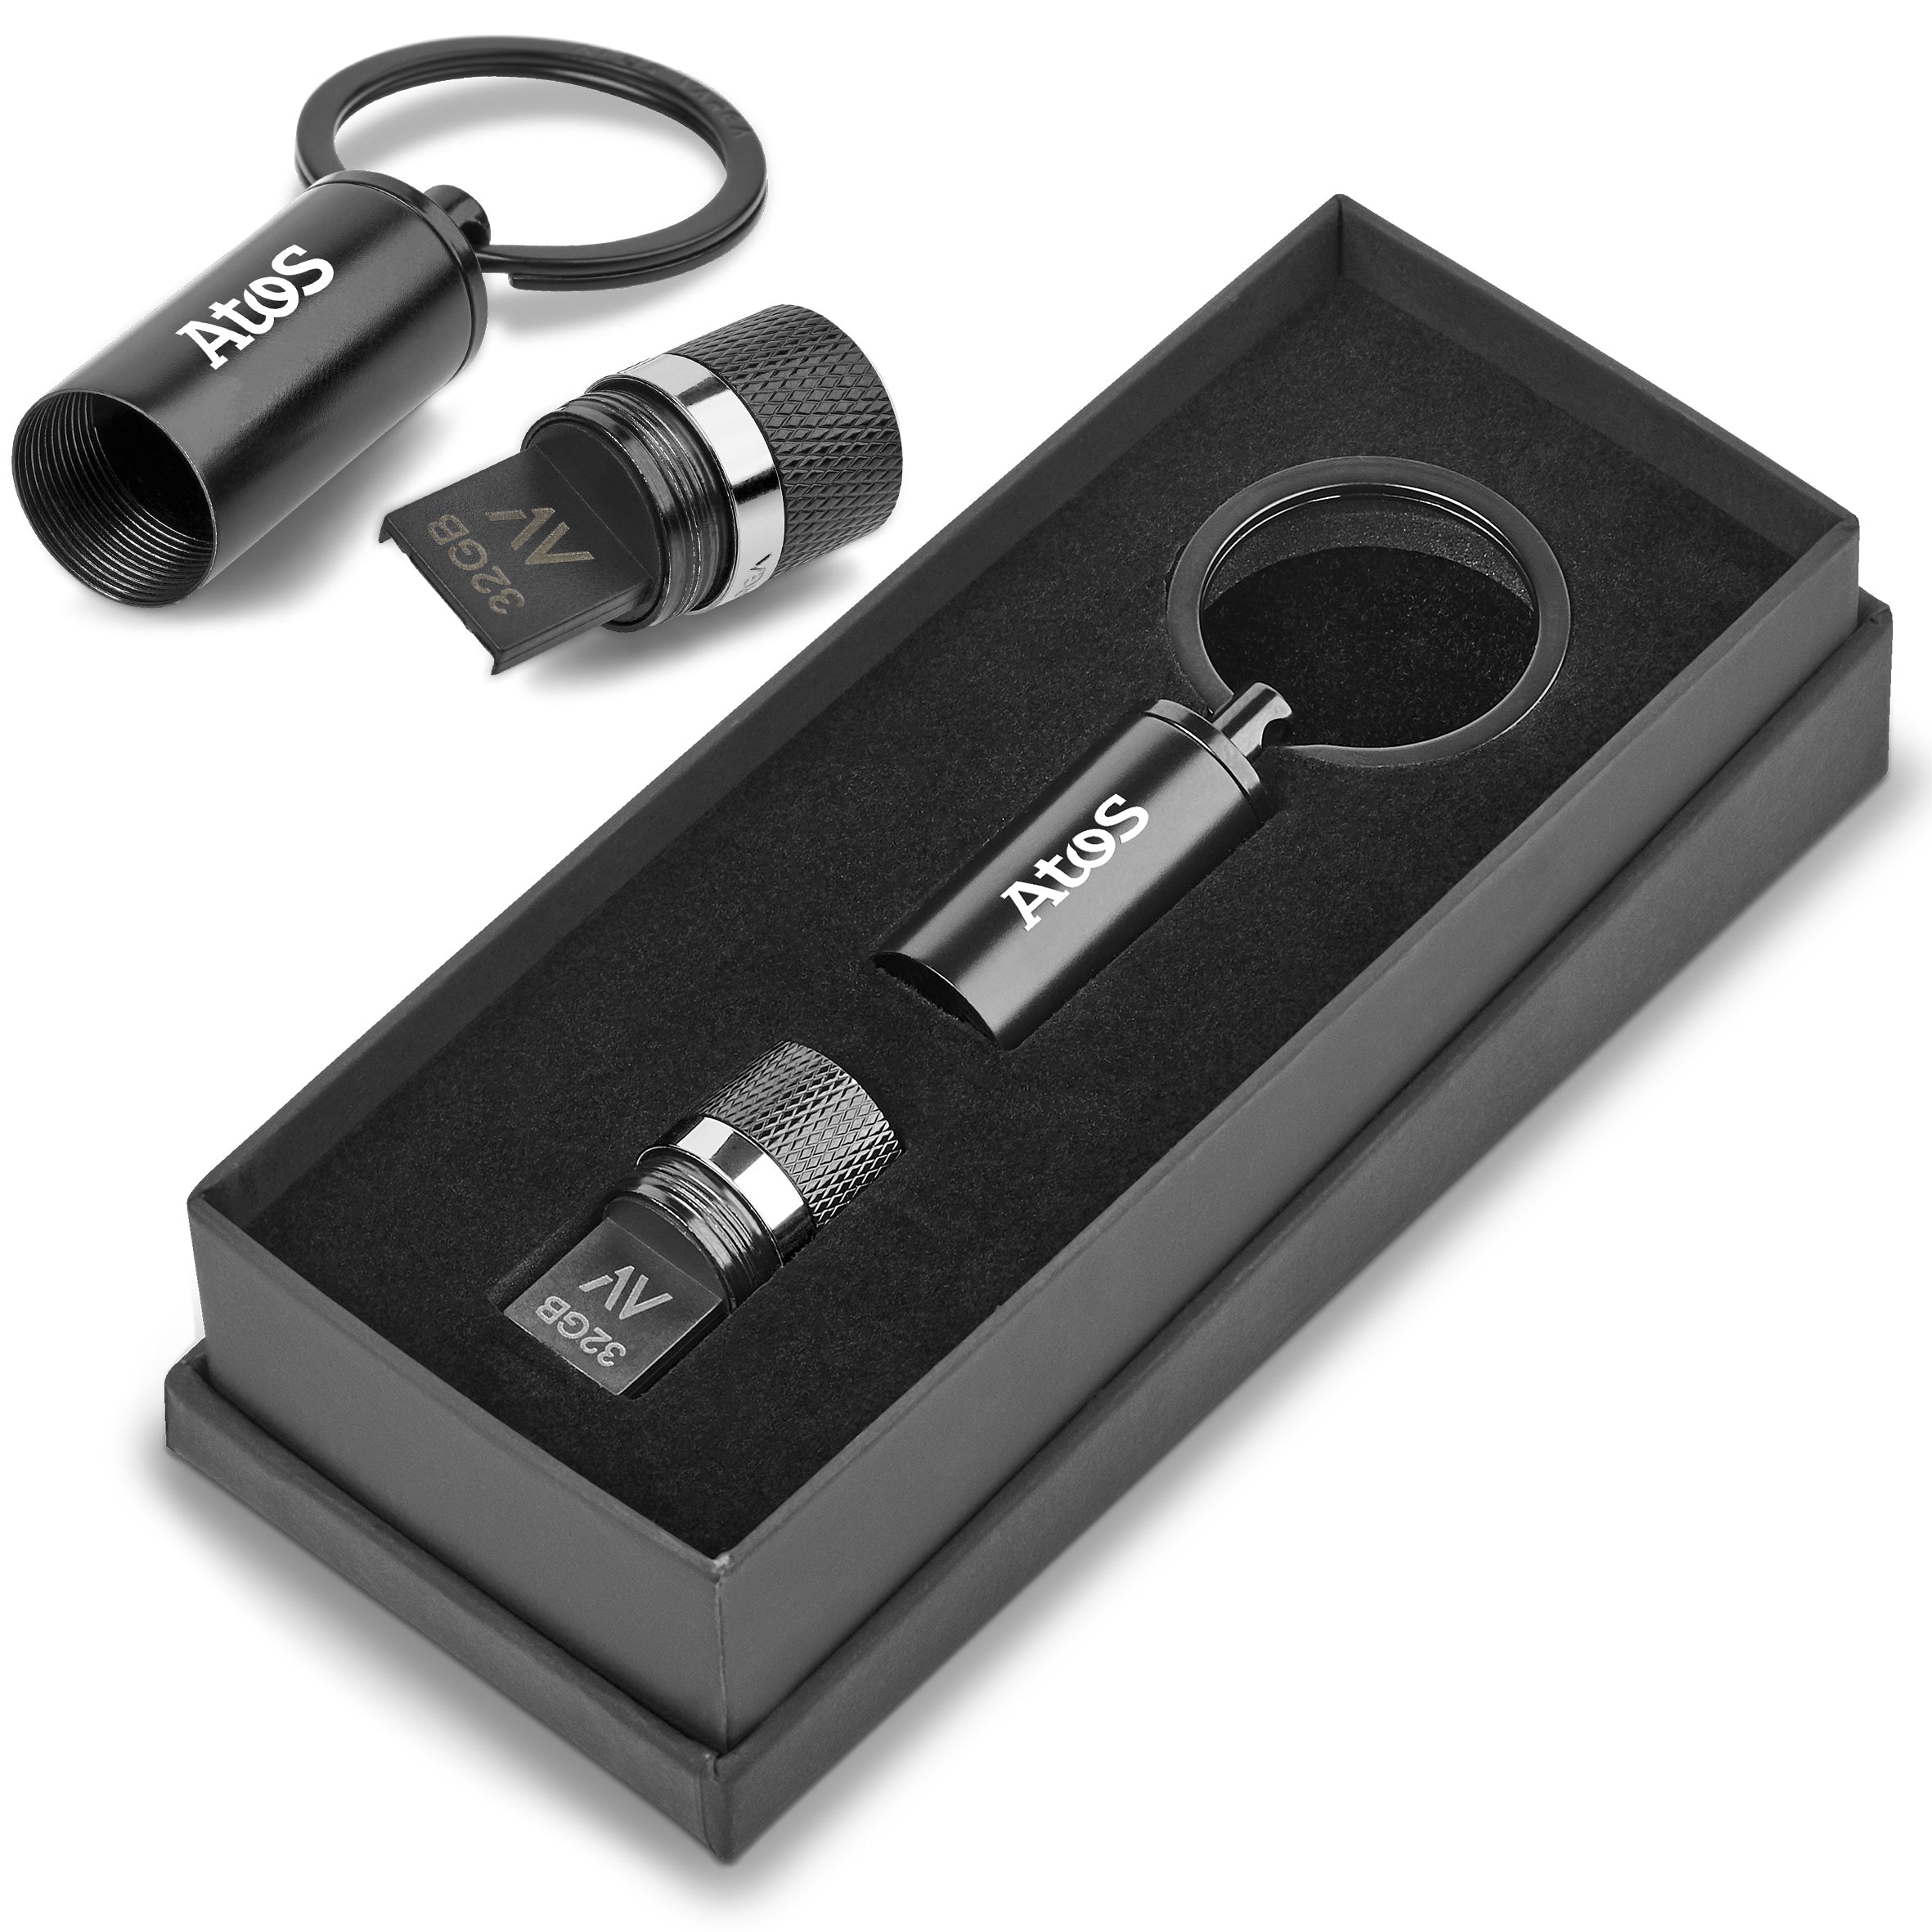 Alex Varga Blofeld 32GB USB Flash Drive Keyholder-32GB-Black-BL